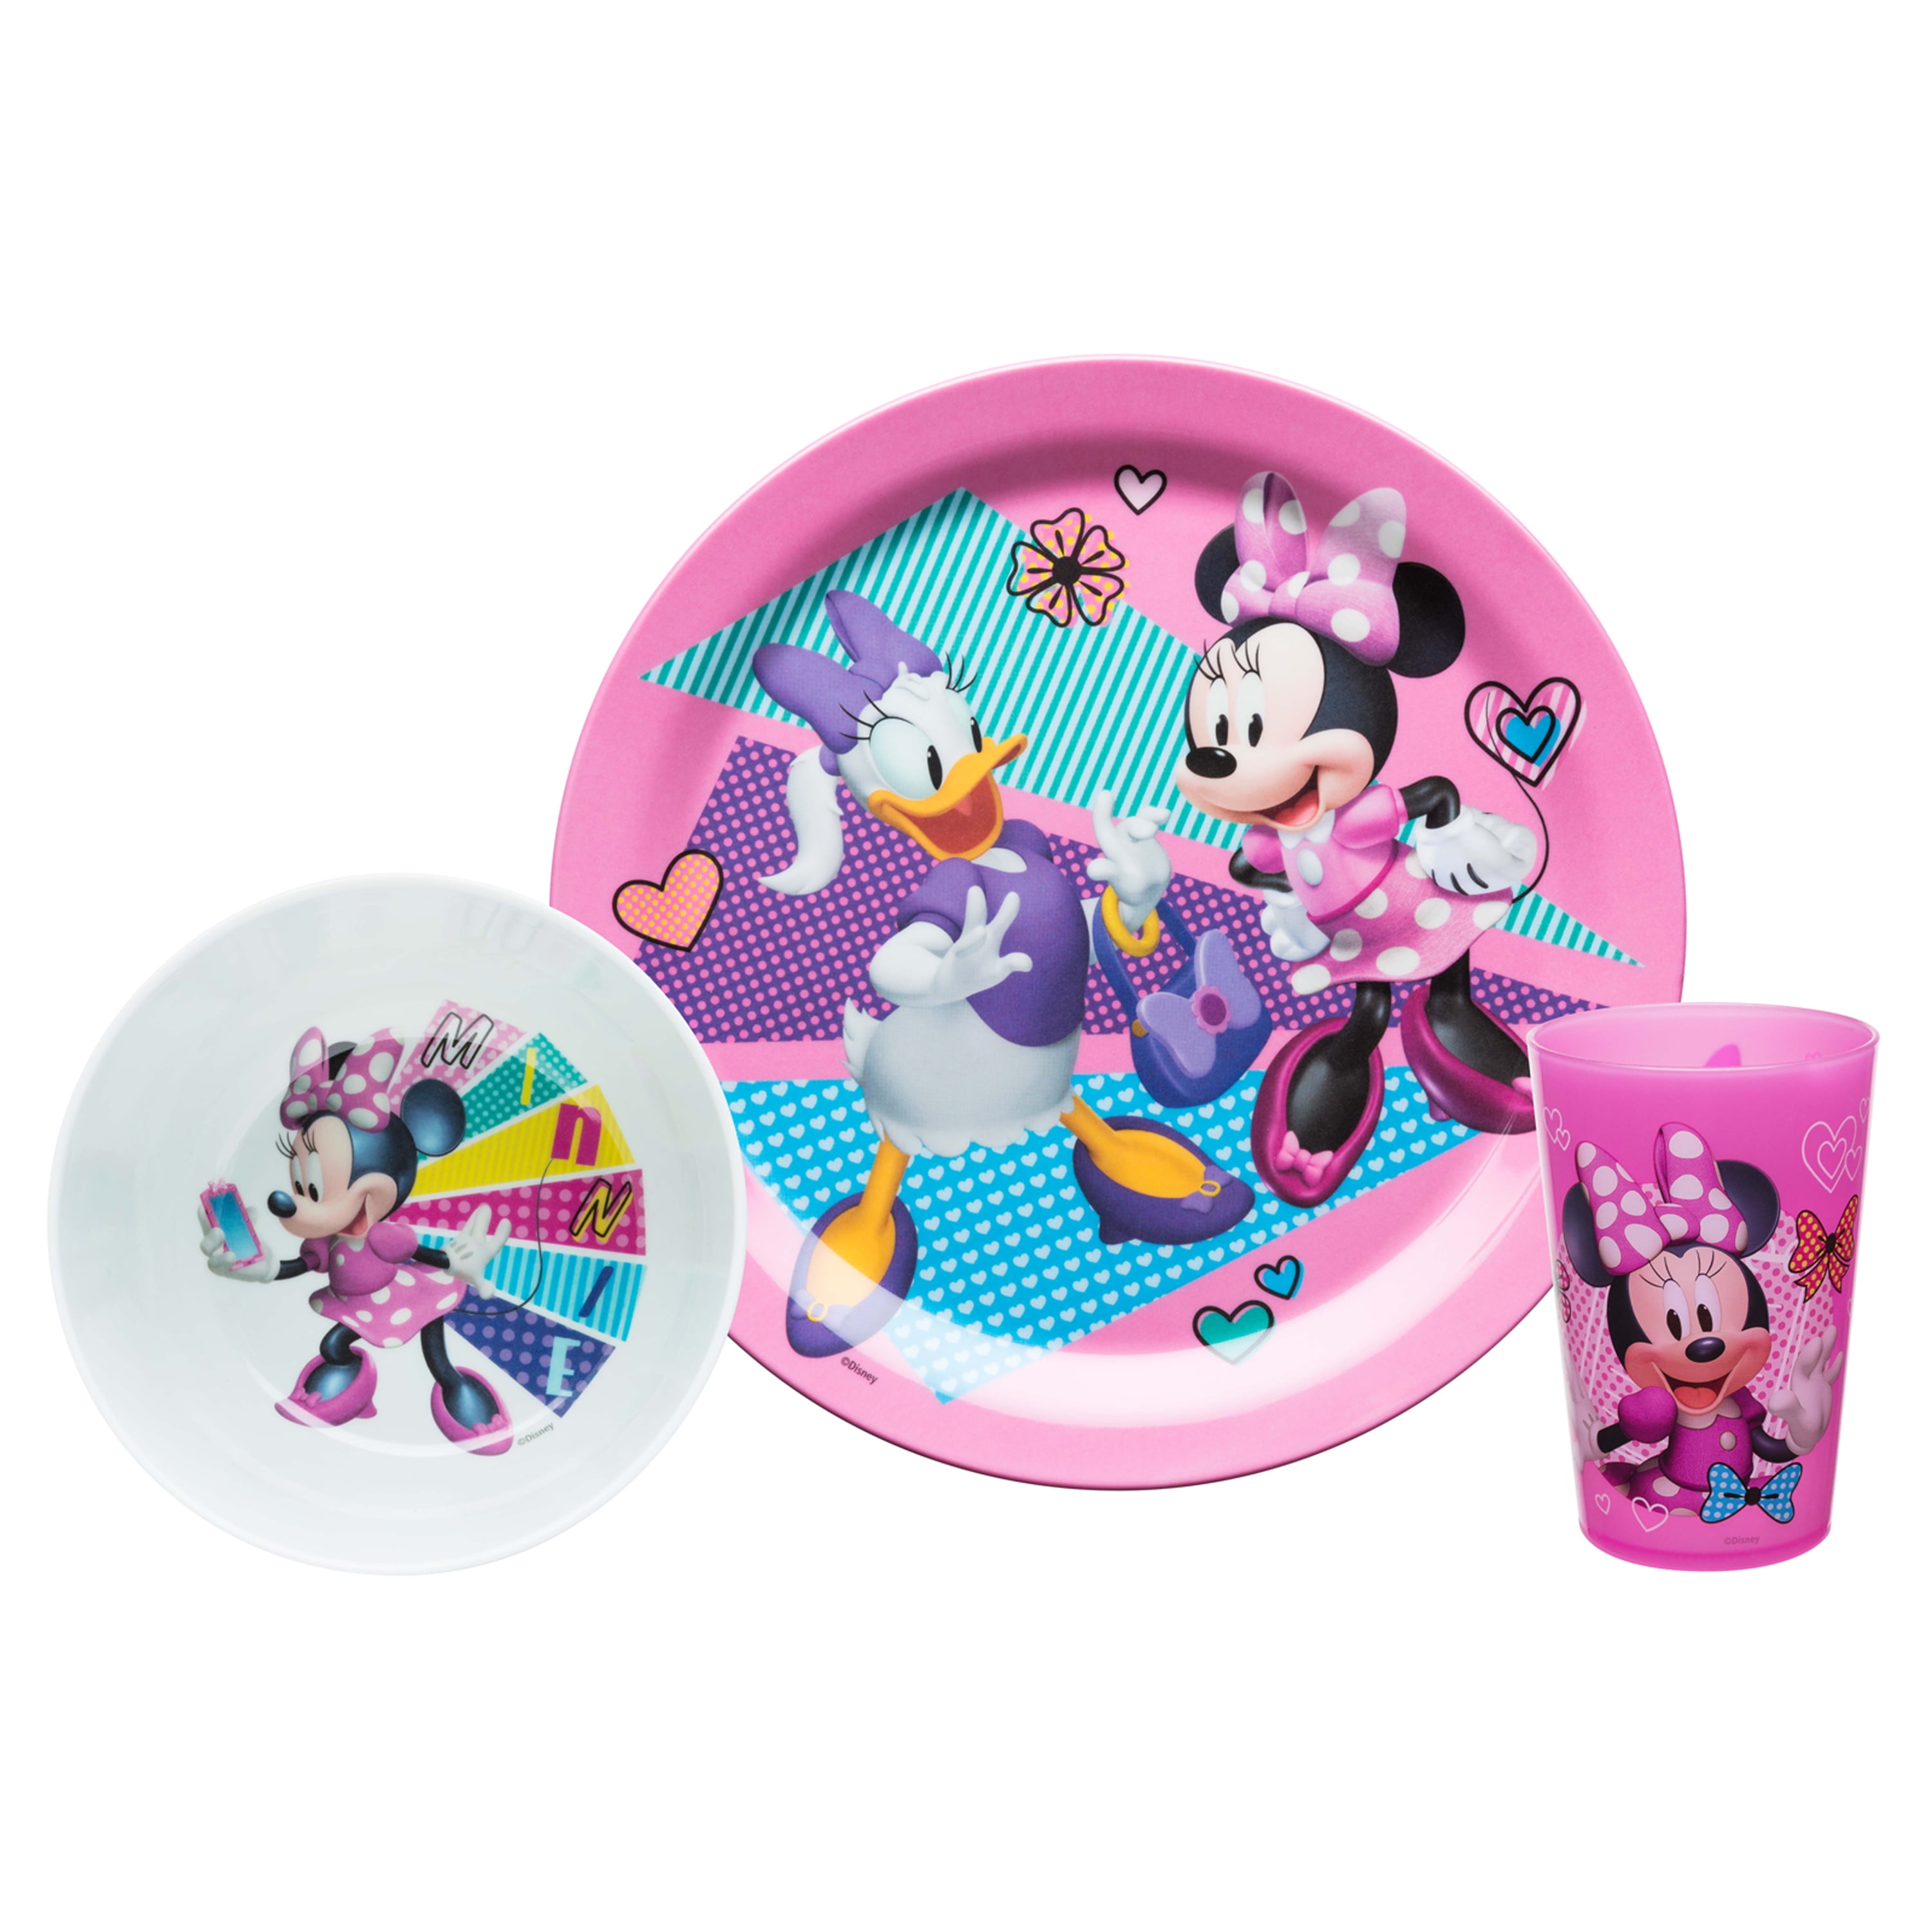 Disney Minnie Mouse Kids Plastic Plate Bowl & Cup Mealtime Gift Set 3 Pieces 